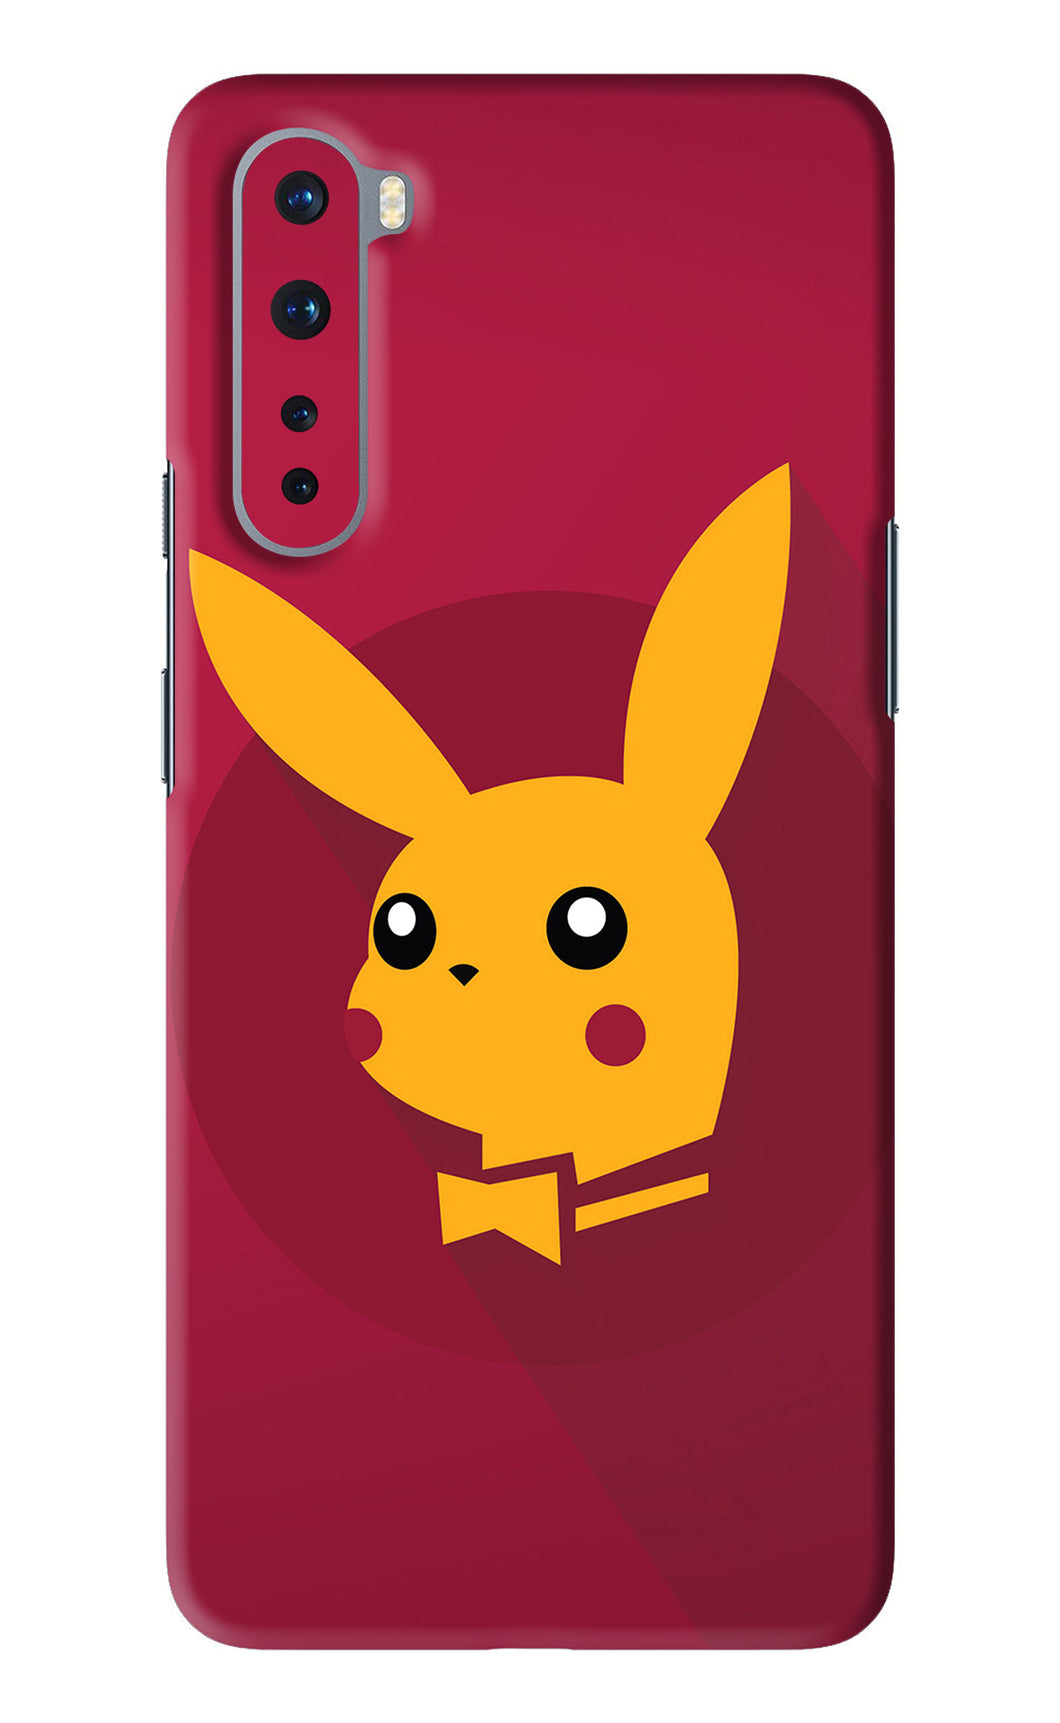 Pikachu OnePlus Nord Back Skin Wrap